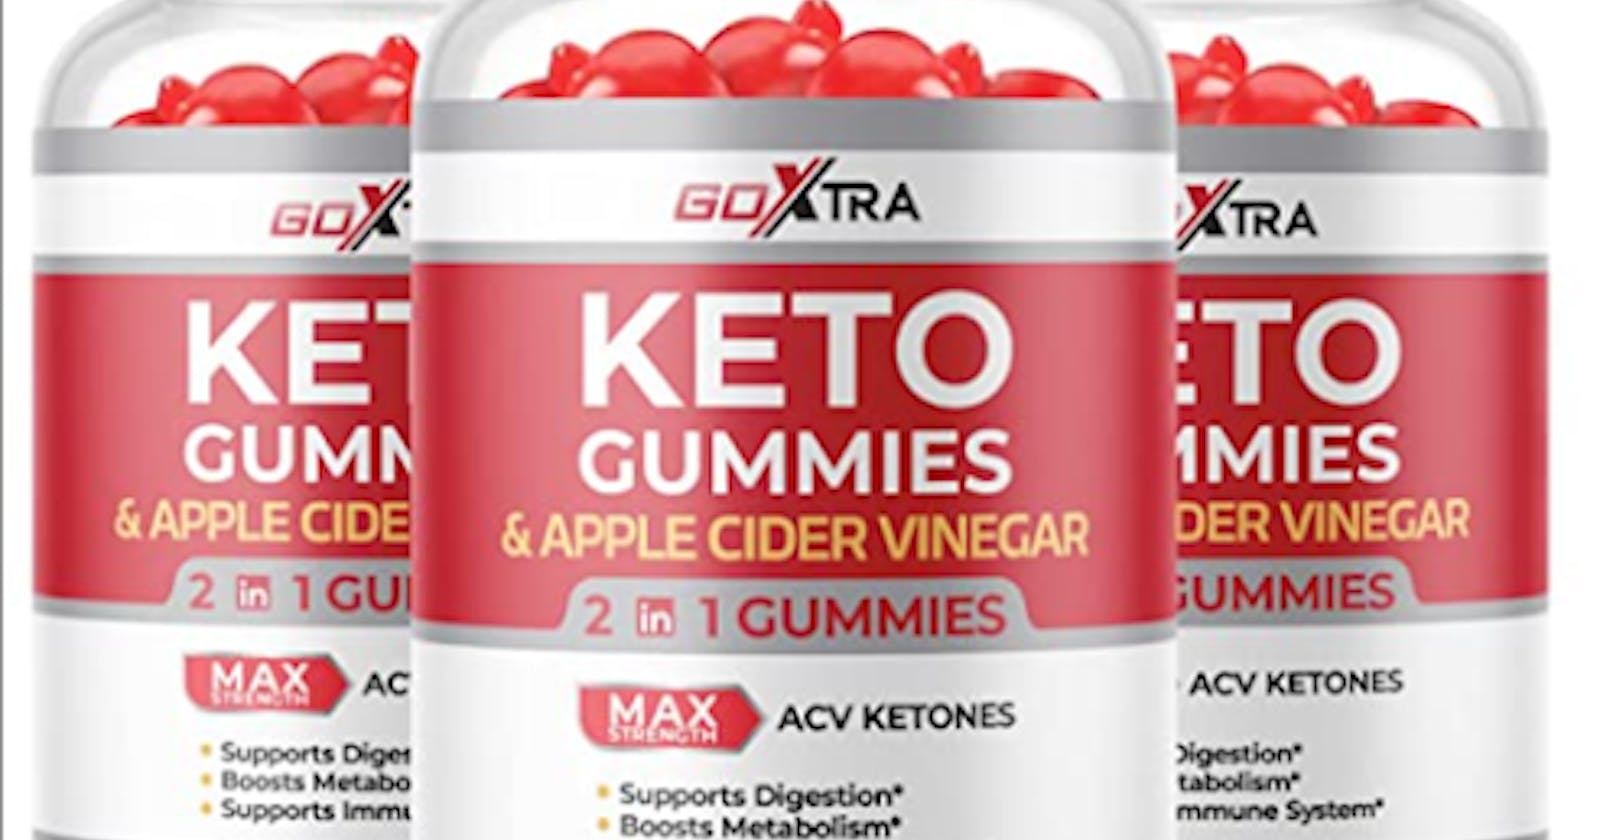 GoXtra Gummies for On-the-Go Nutrition